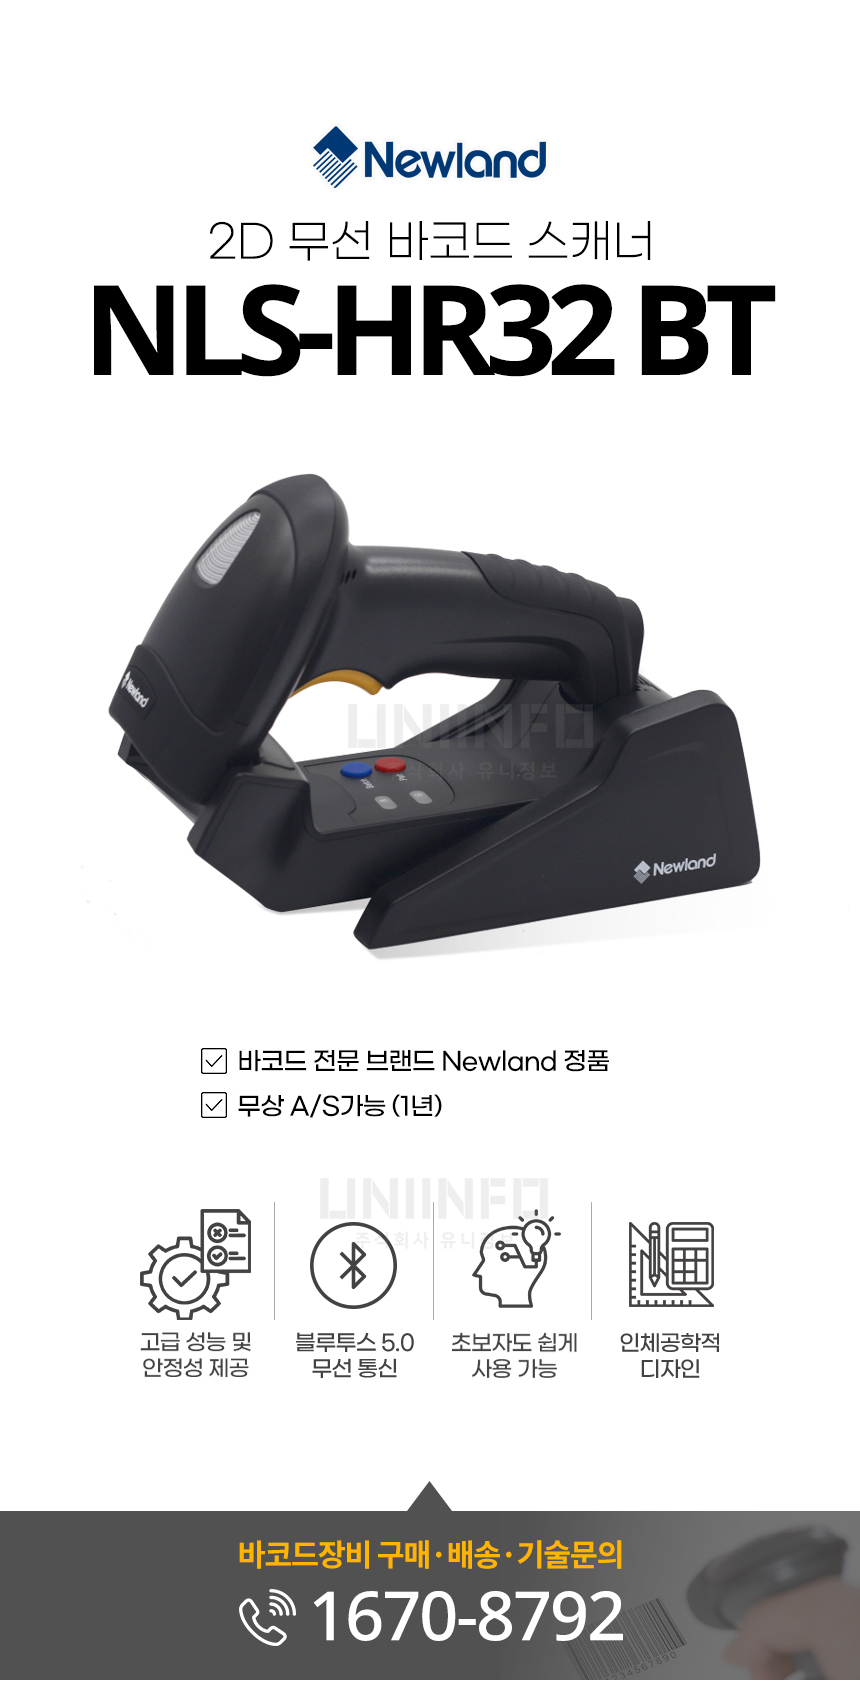 2d 무선 바코드 스캐너 nls-hr32 bt 고성능 안정성 블루투스 5.0 인체공학적 디자인